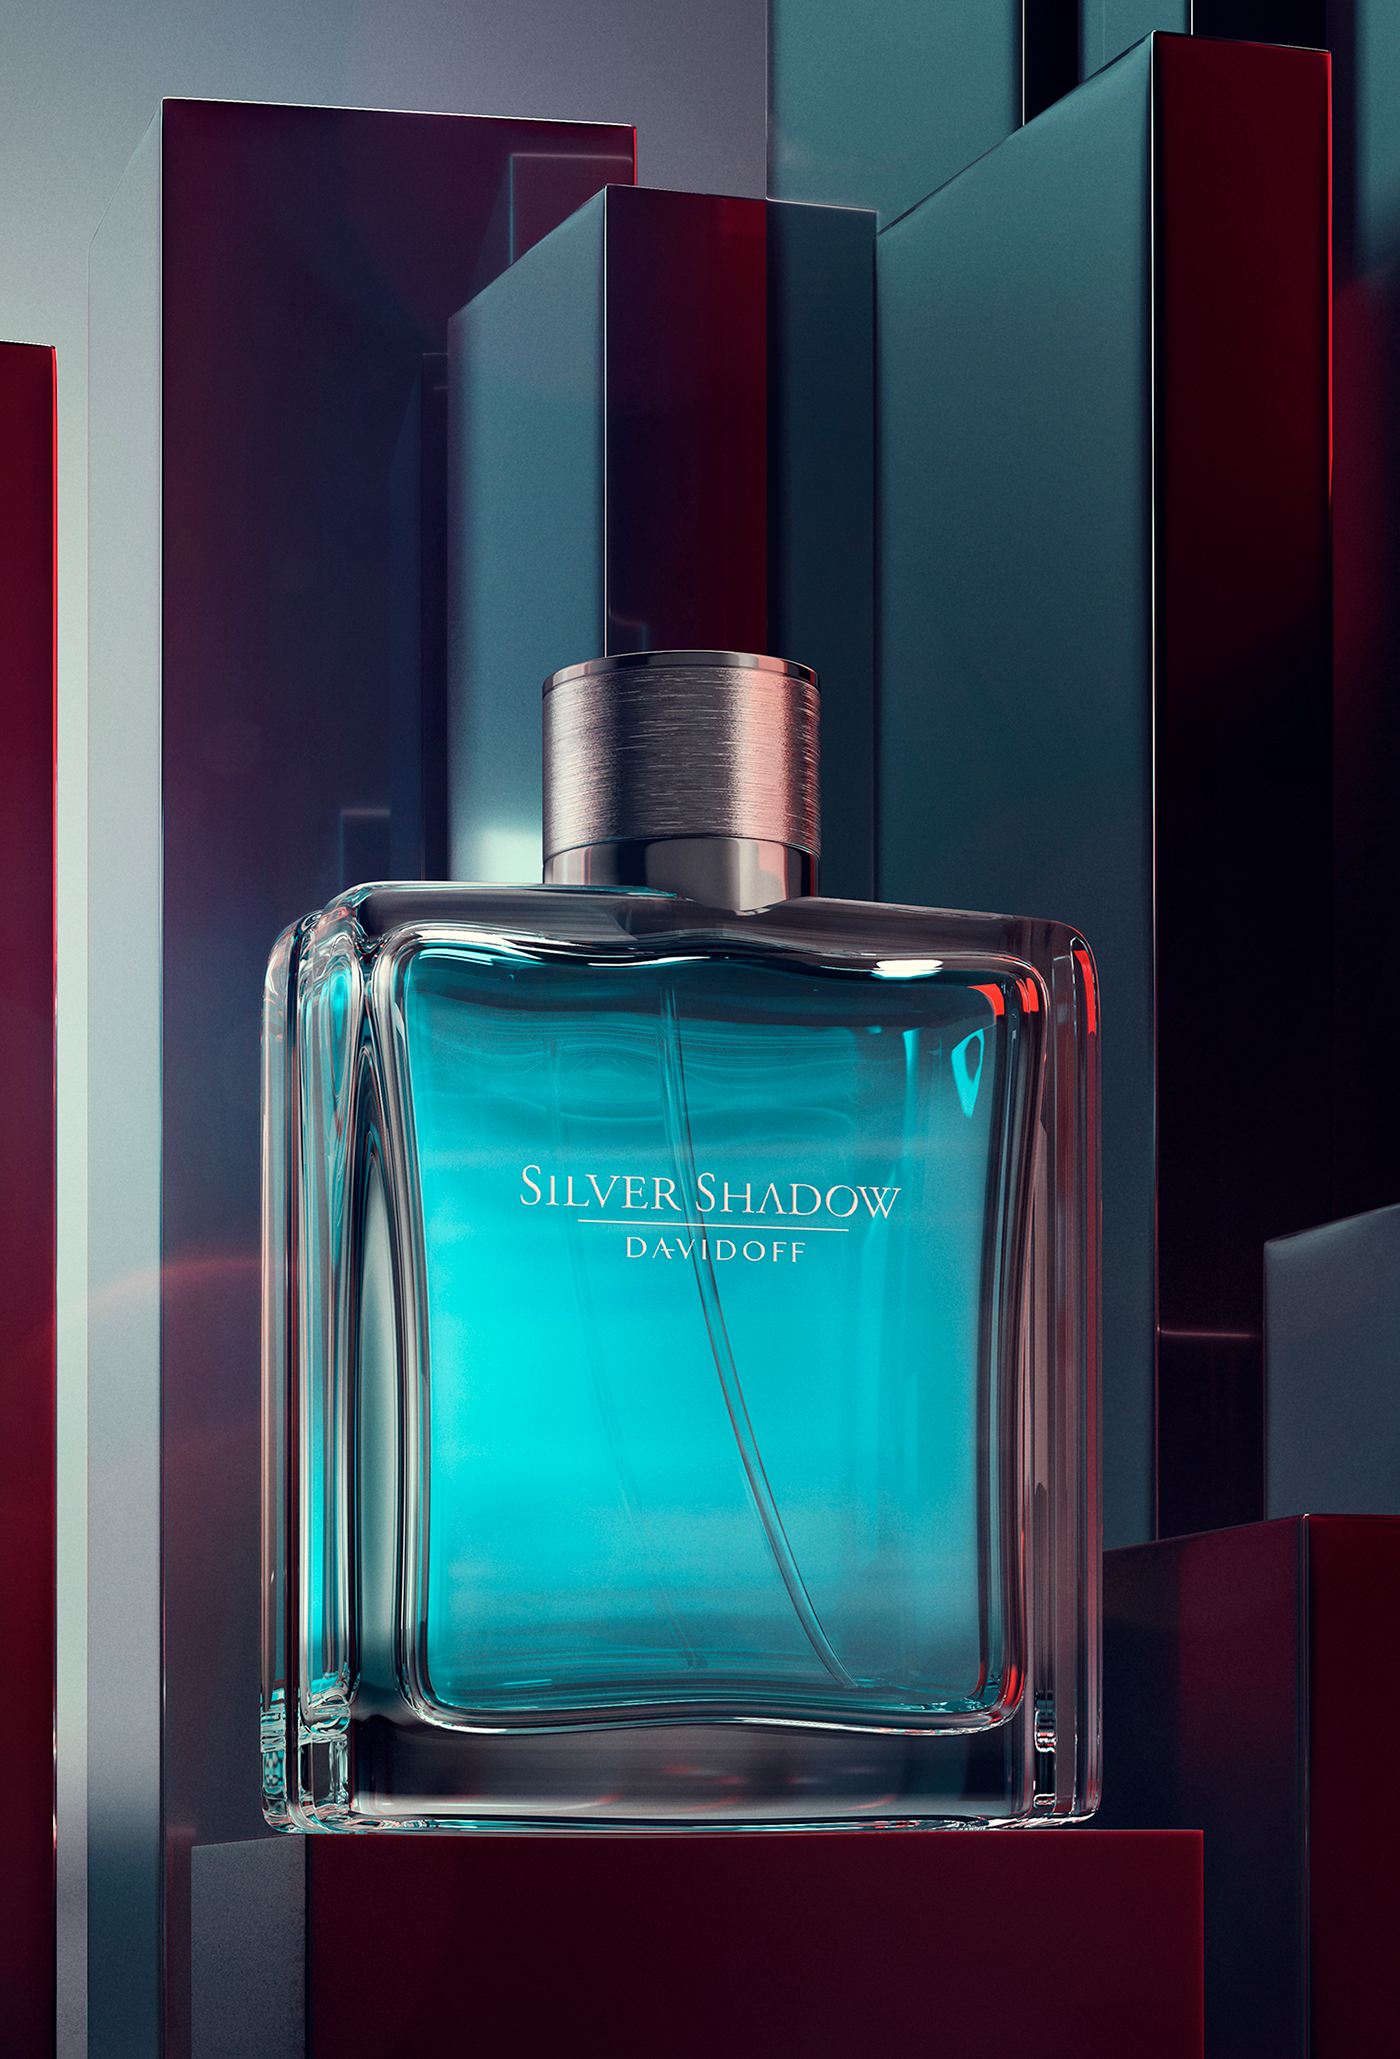 davidoff silvershadow perfume glass bottle background